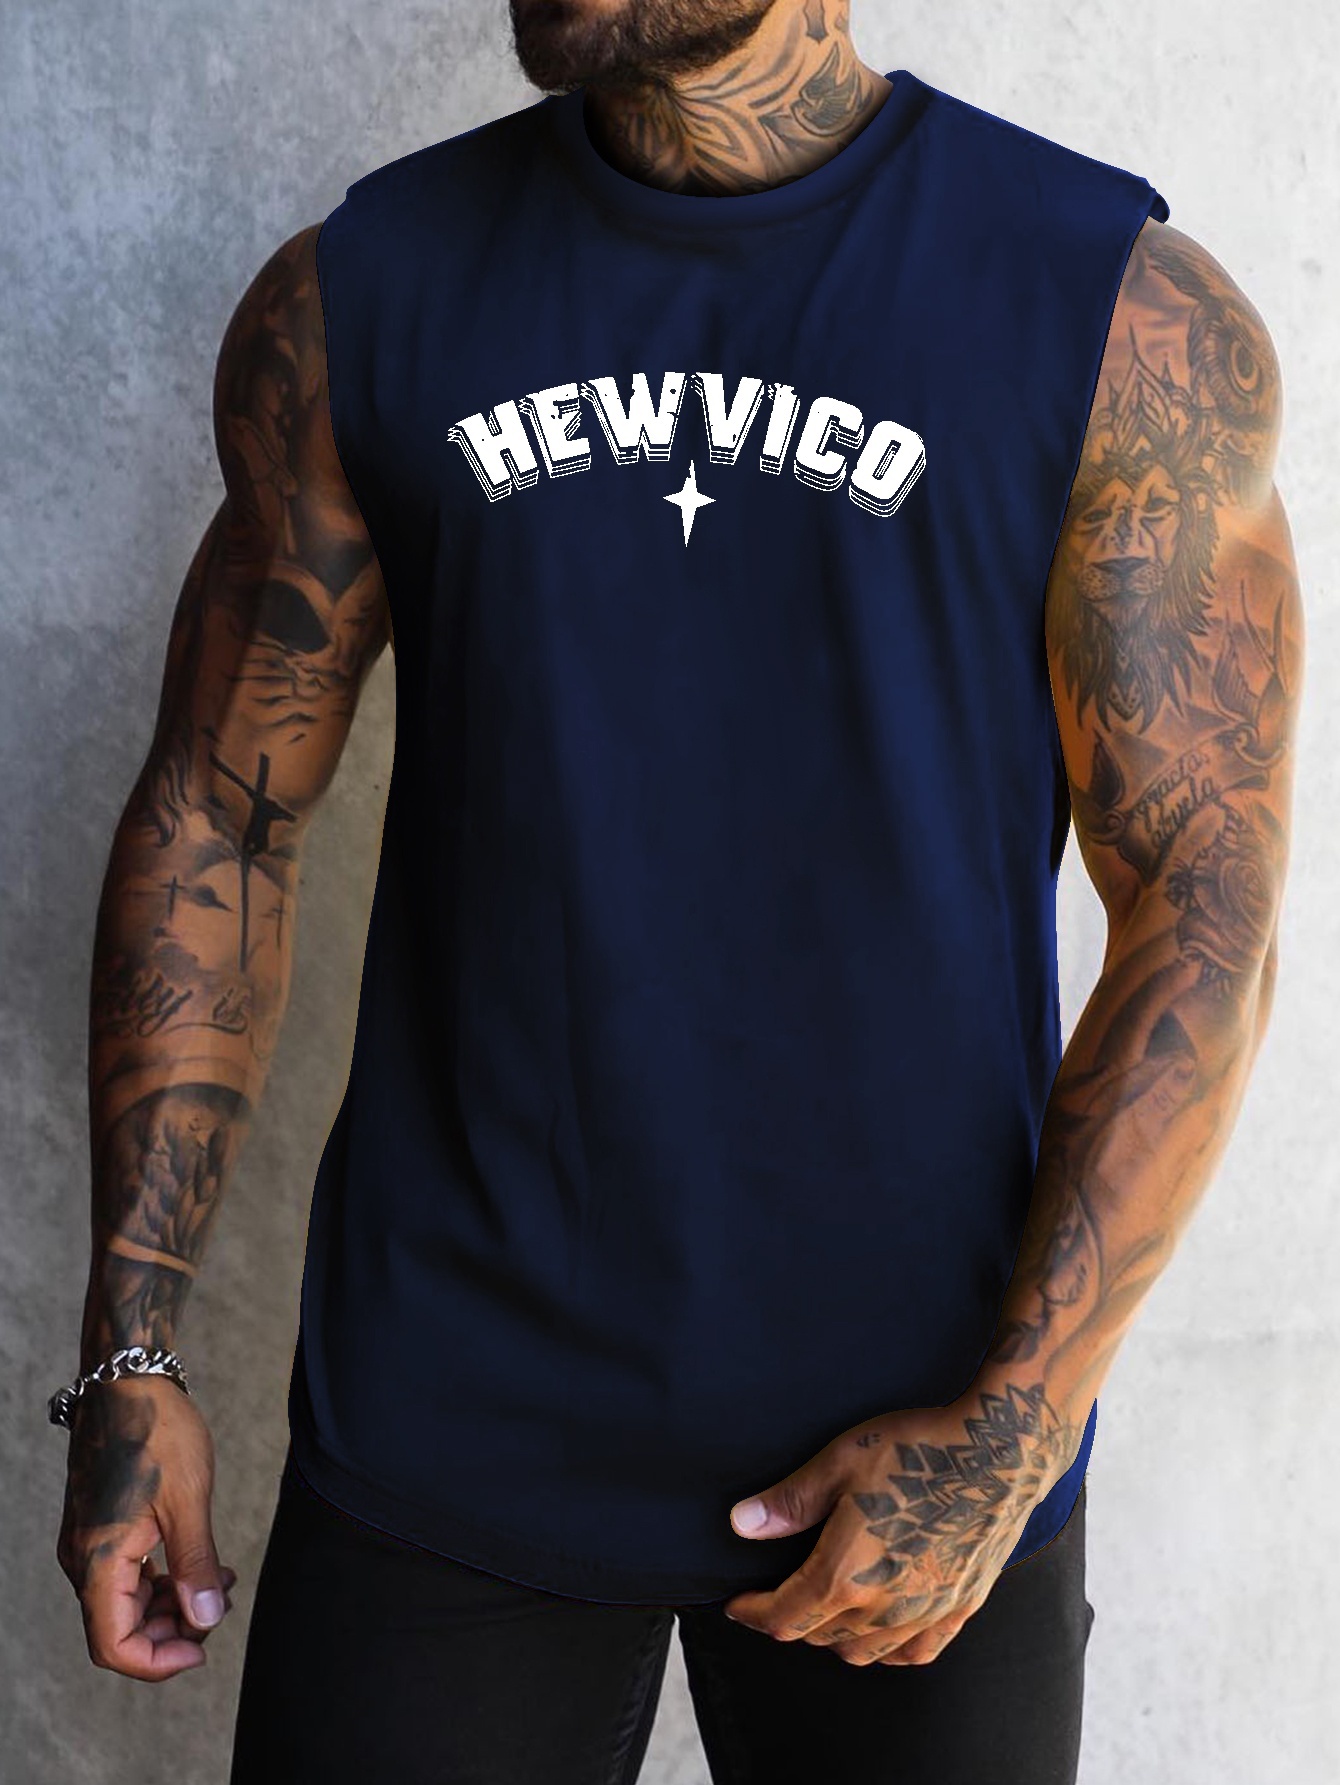 Hewvico Print A Shirt Tanks Men S Singlet Dry Fit Sleeveless Tank